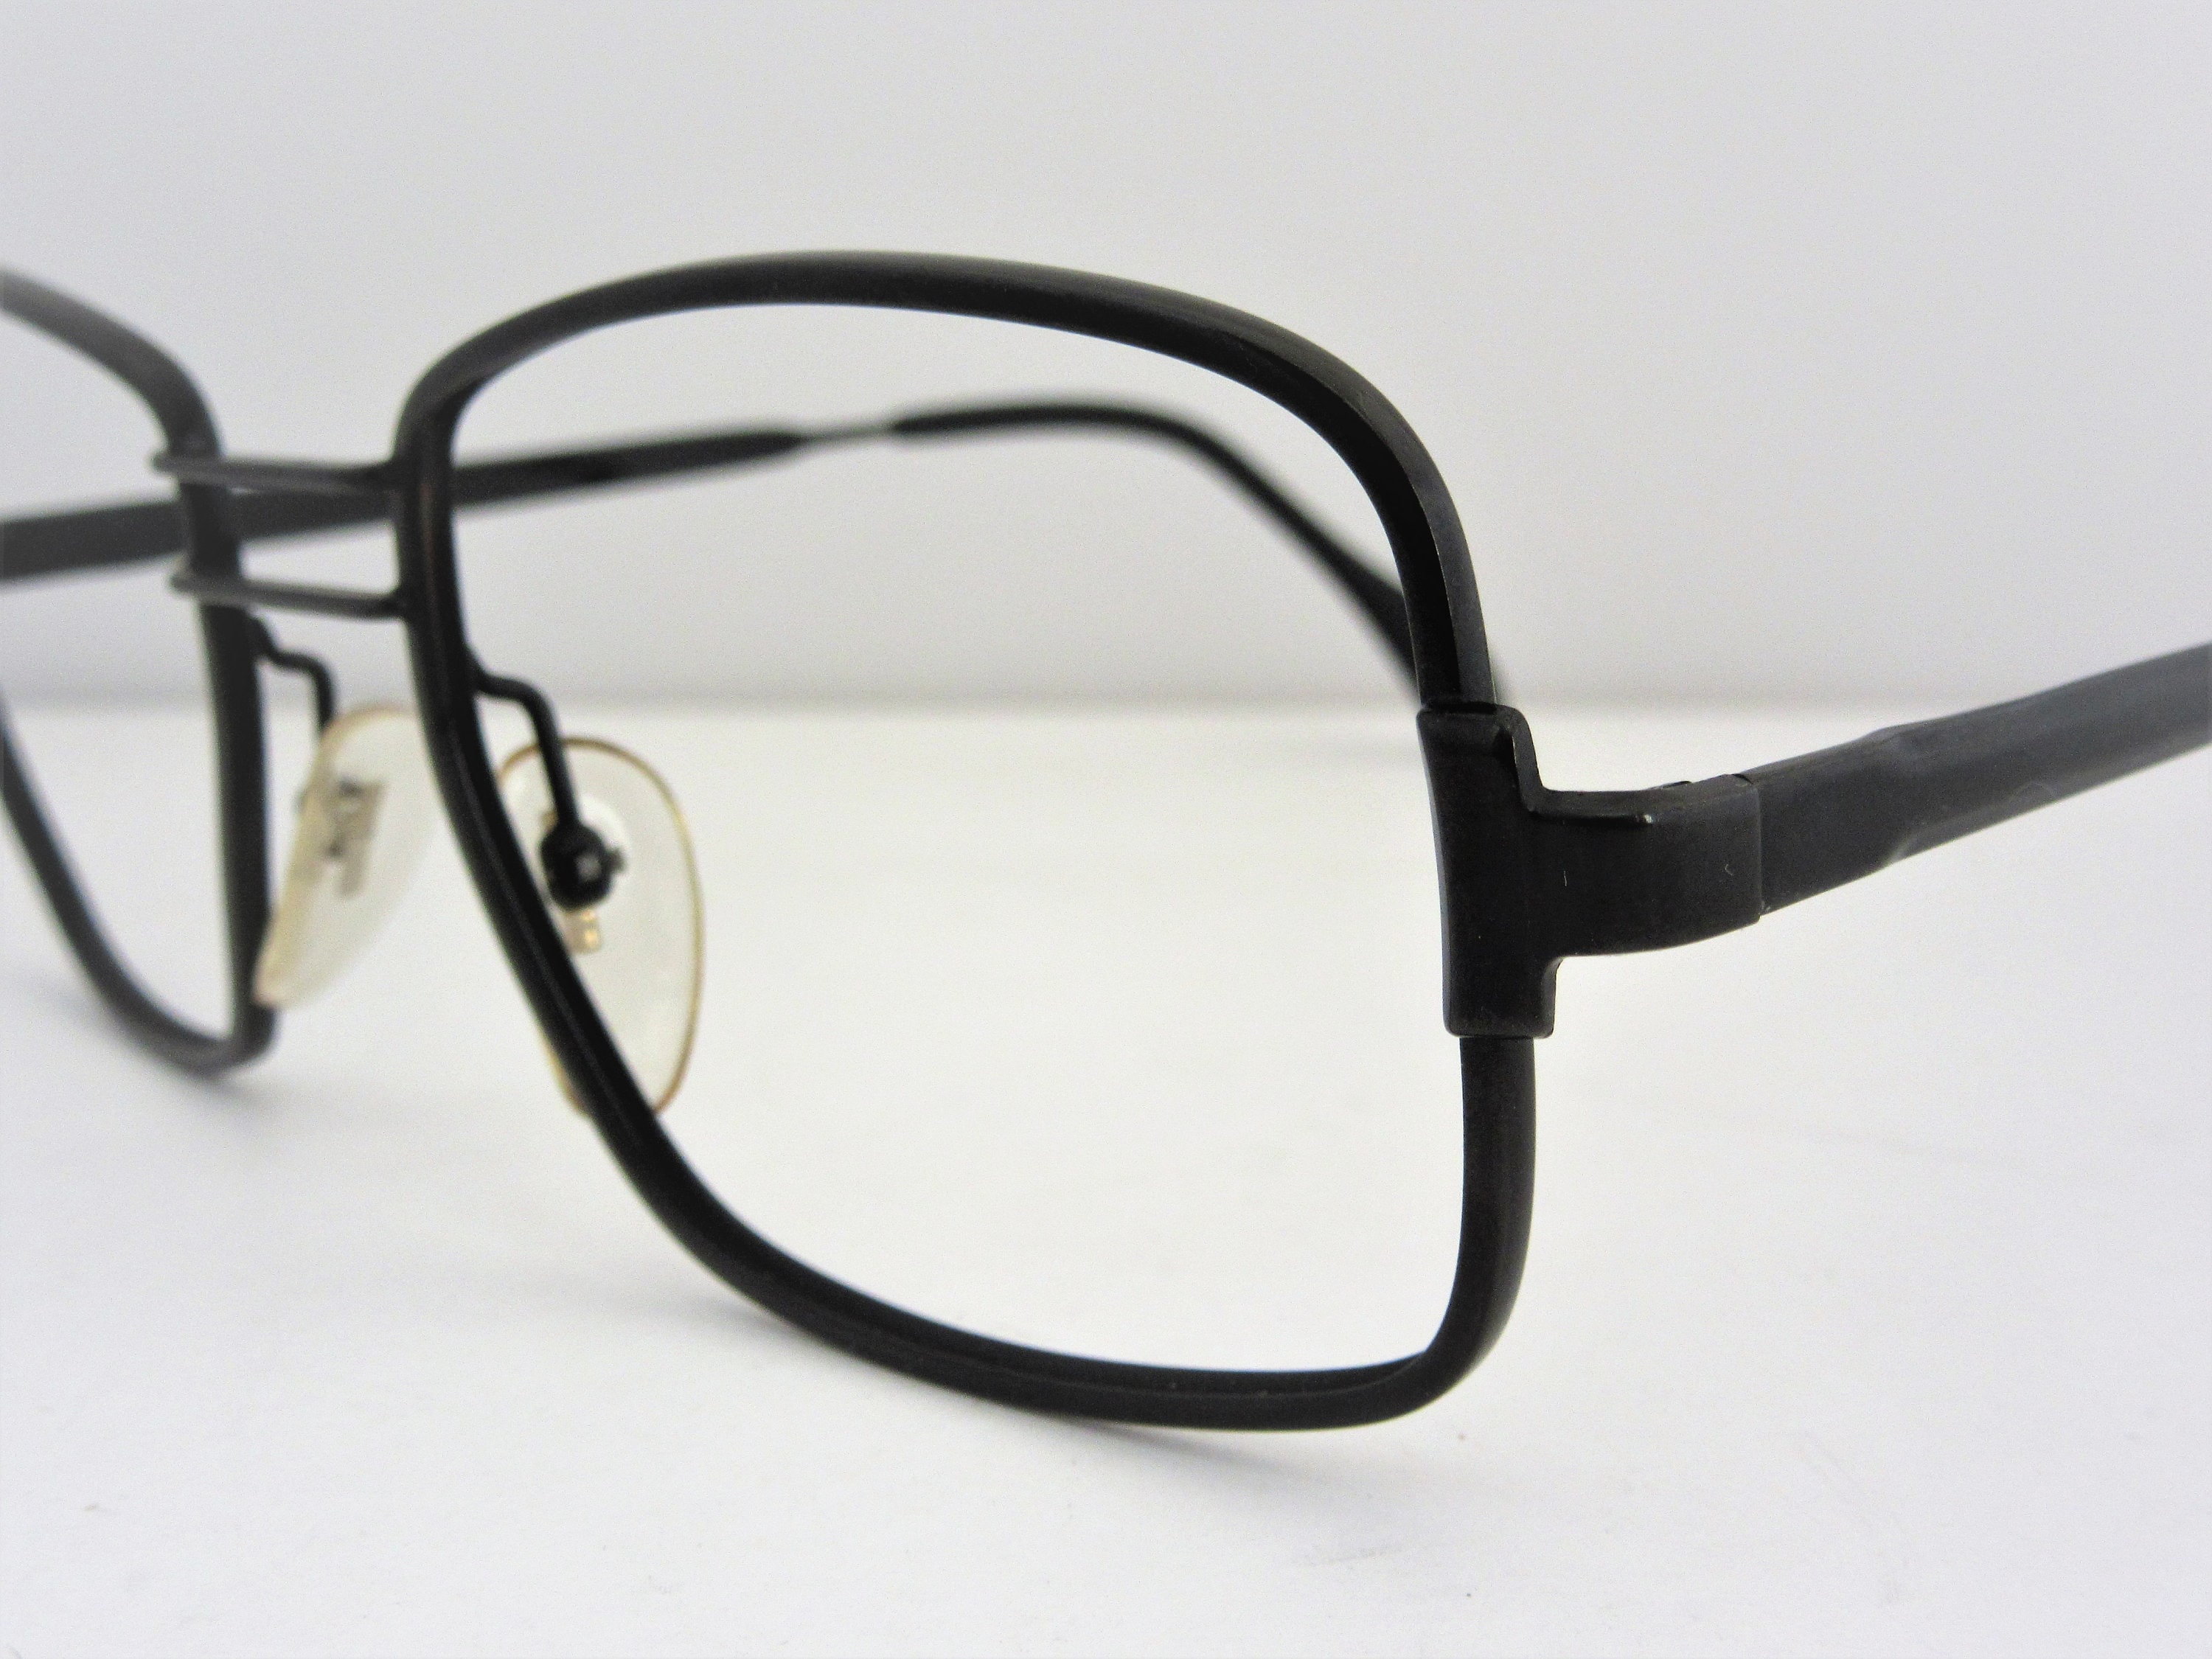 MENRAD Mod. 301 Men's Black Metal Eyeglass Frames Made in Germany 1970s ...